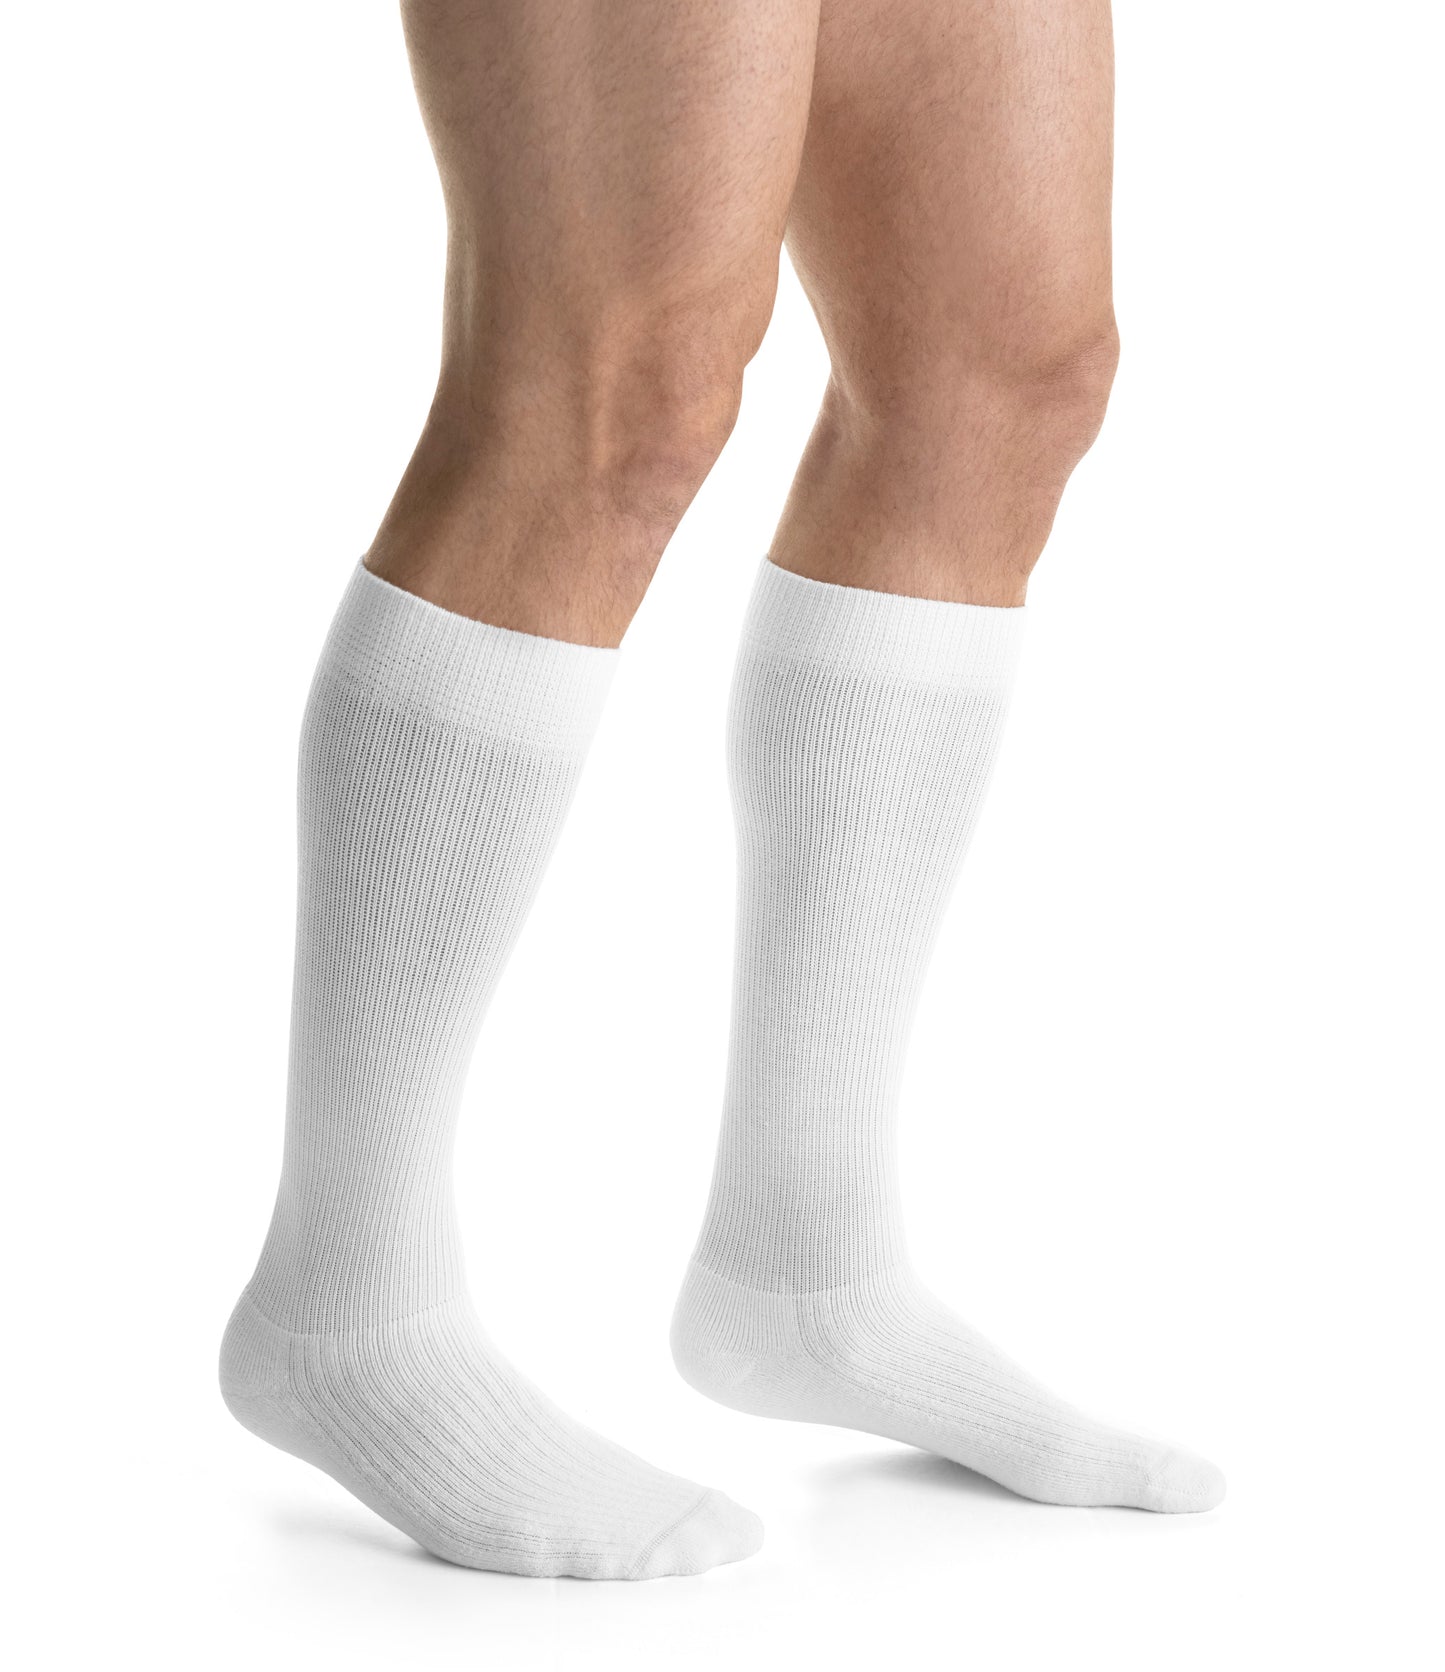 JOBST ActiveWear Compression Socks 30-40 mmHg Knee High Closed Toe